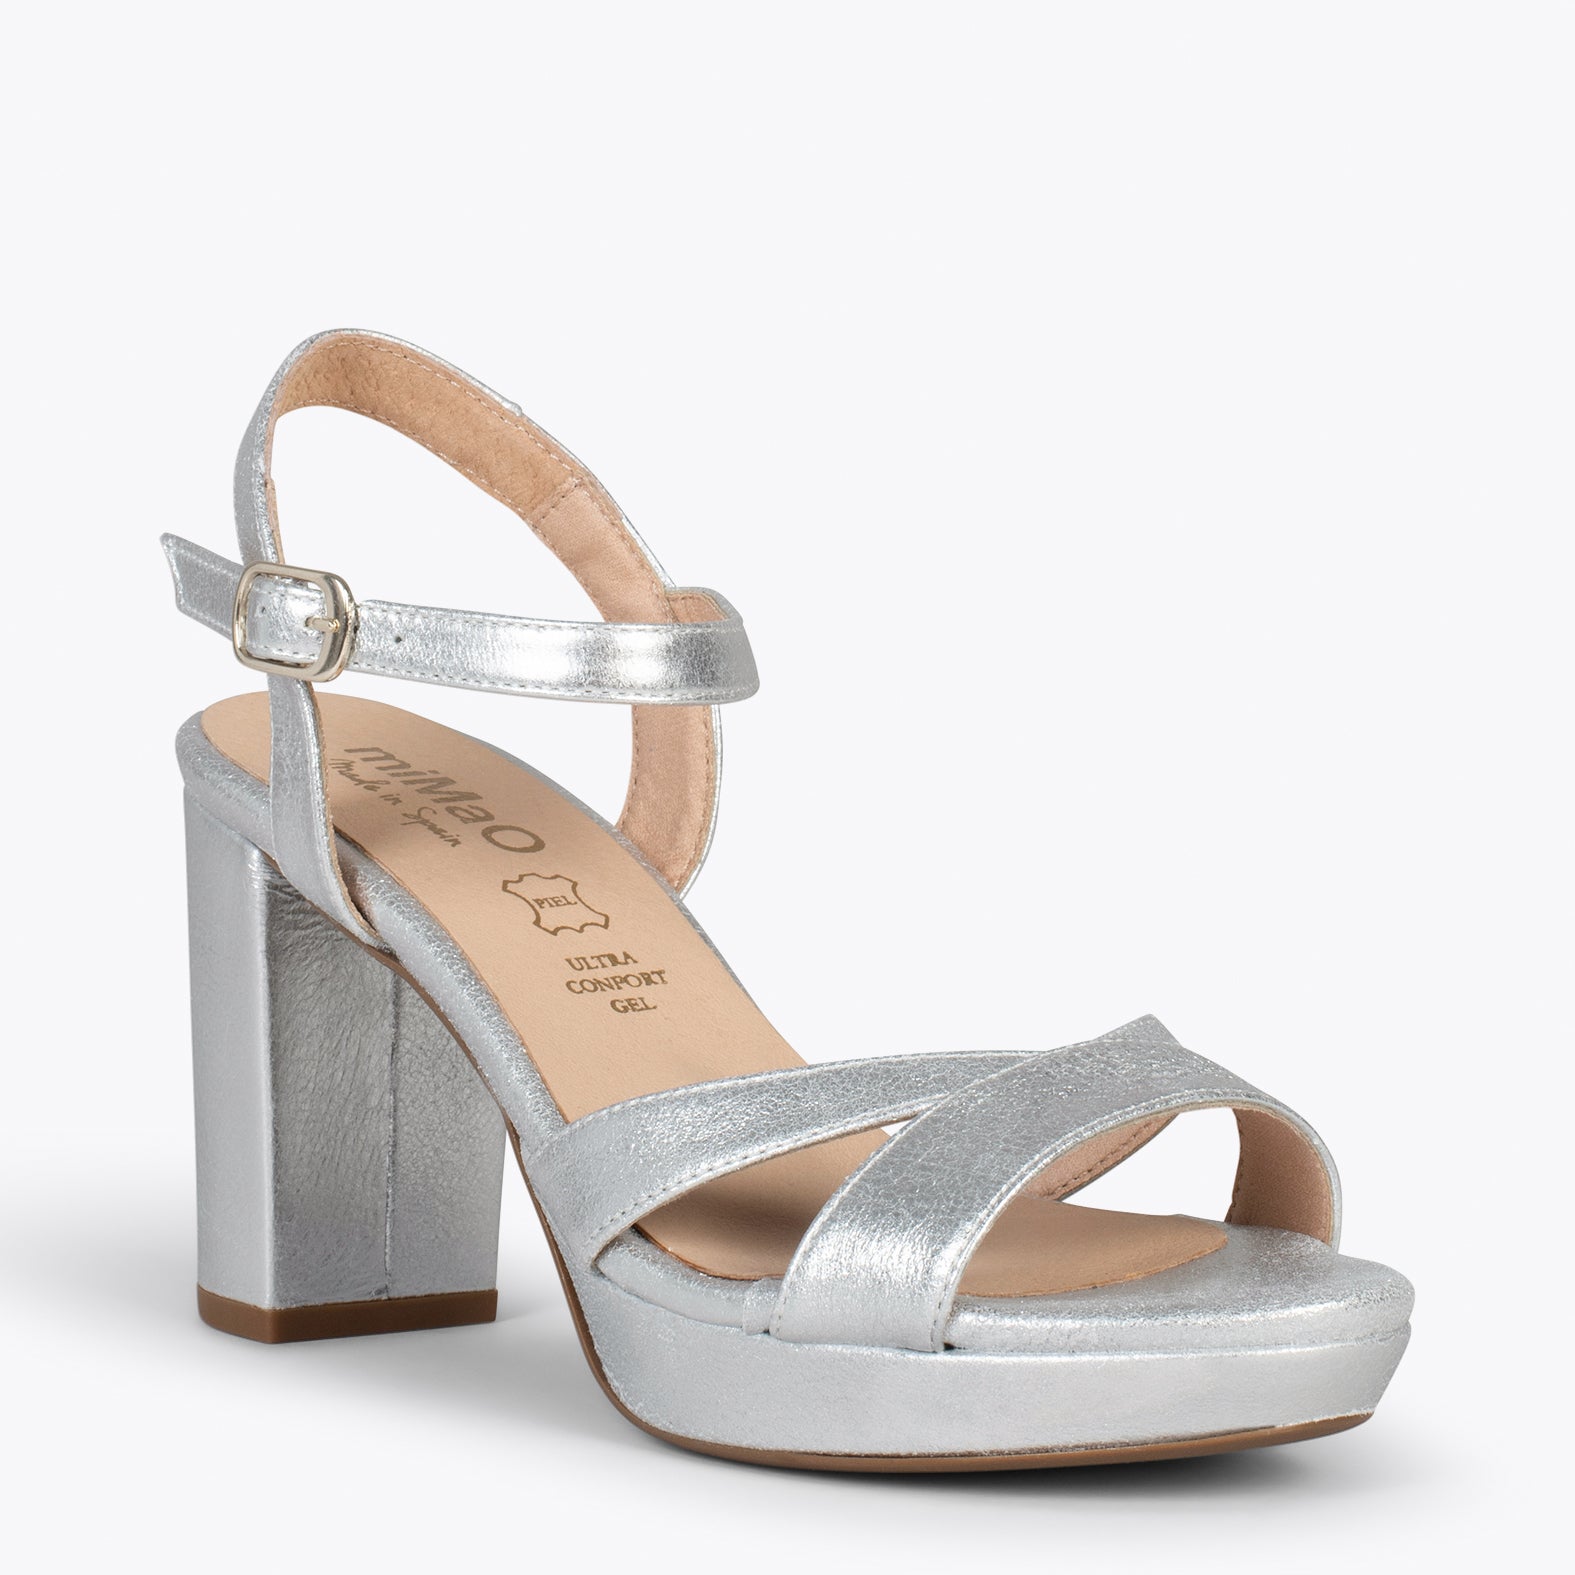 PARIS – SILVER high heel sandal with platform